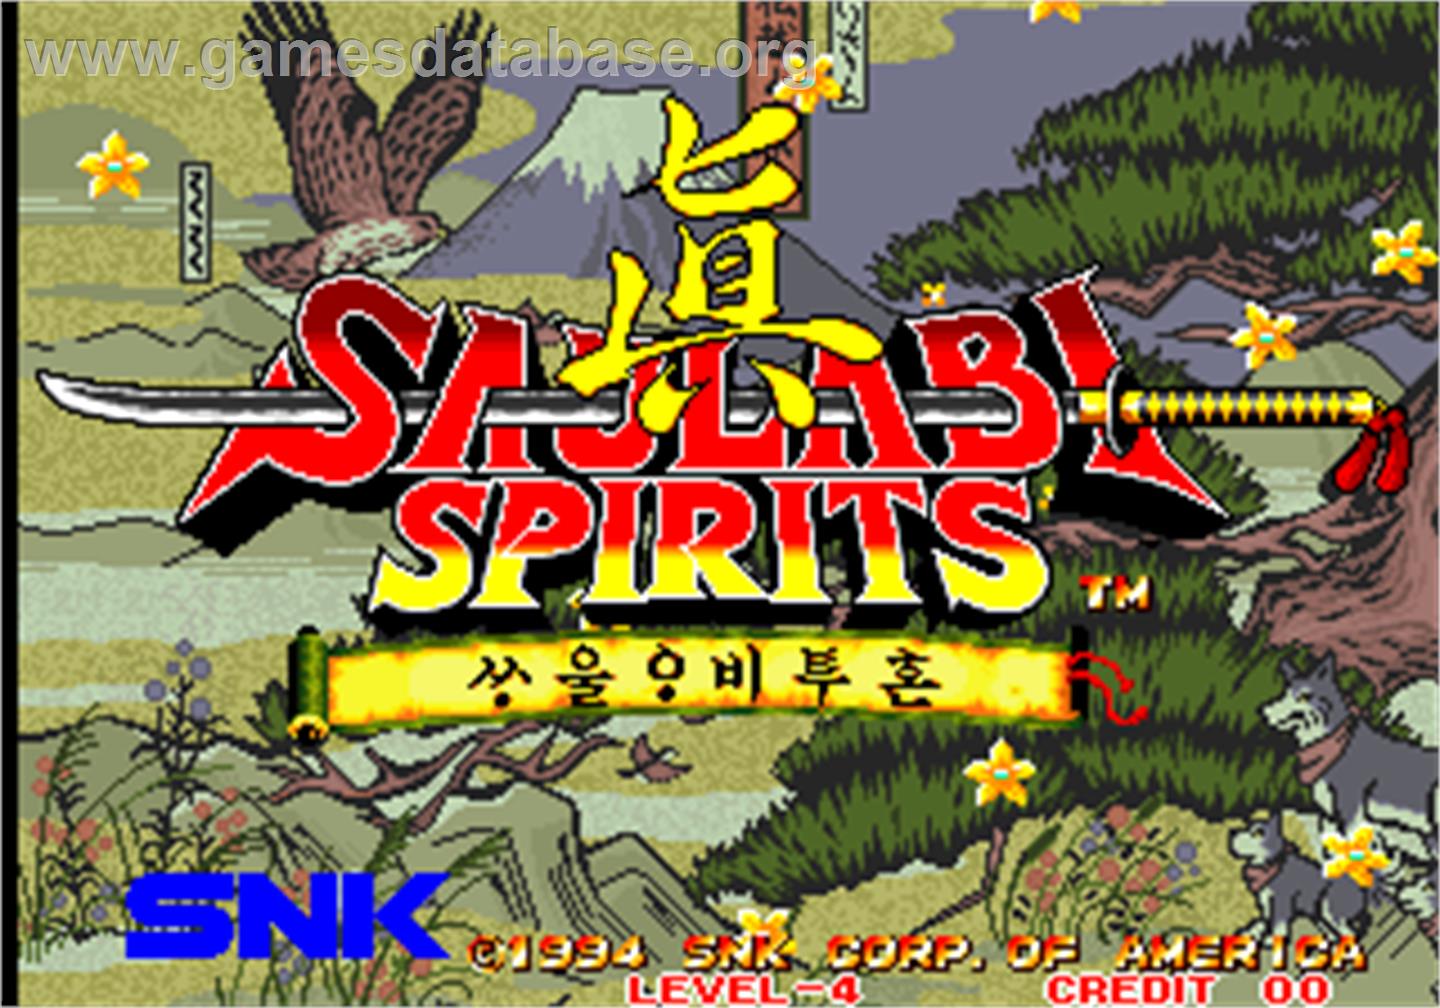 Saulabi Spirits / Jin Saulabi Tu Hon - Arcade - Artwork - Title Screen